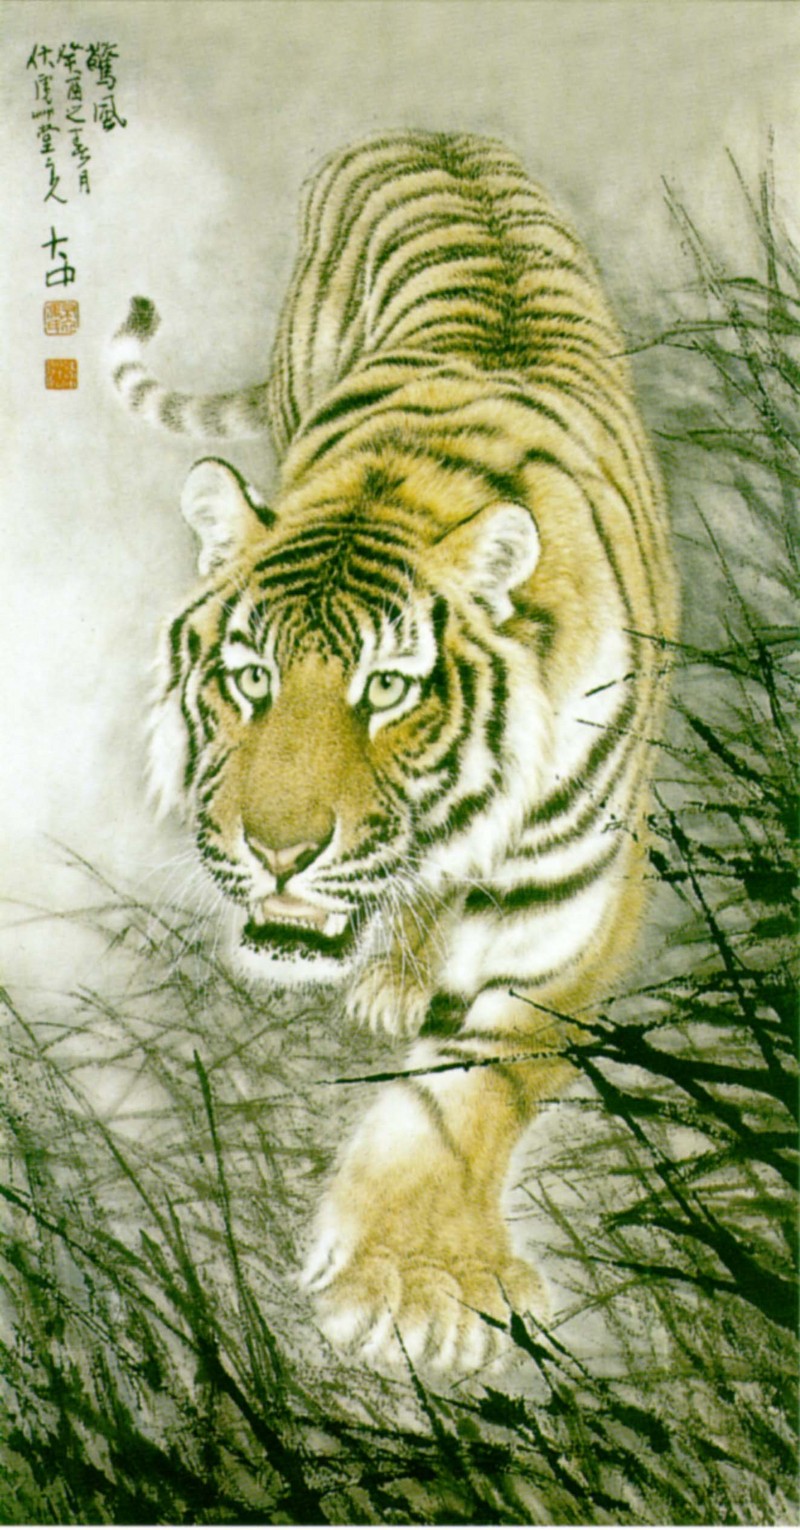 1998 Greeting Card - Tiger painting [1/1]; DISPLAY FULL IMAGE.